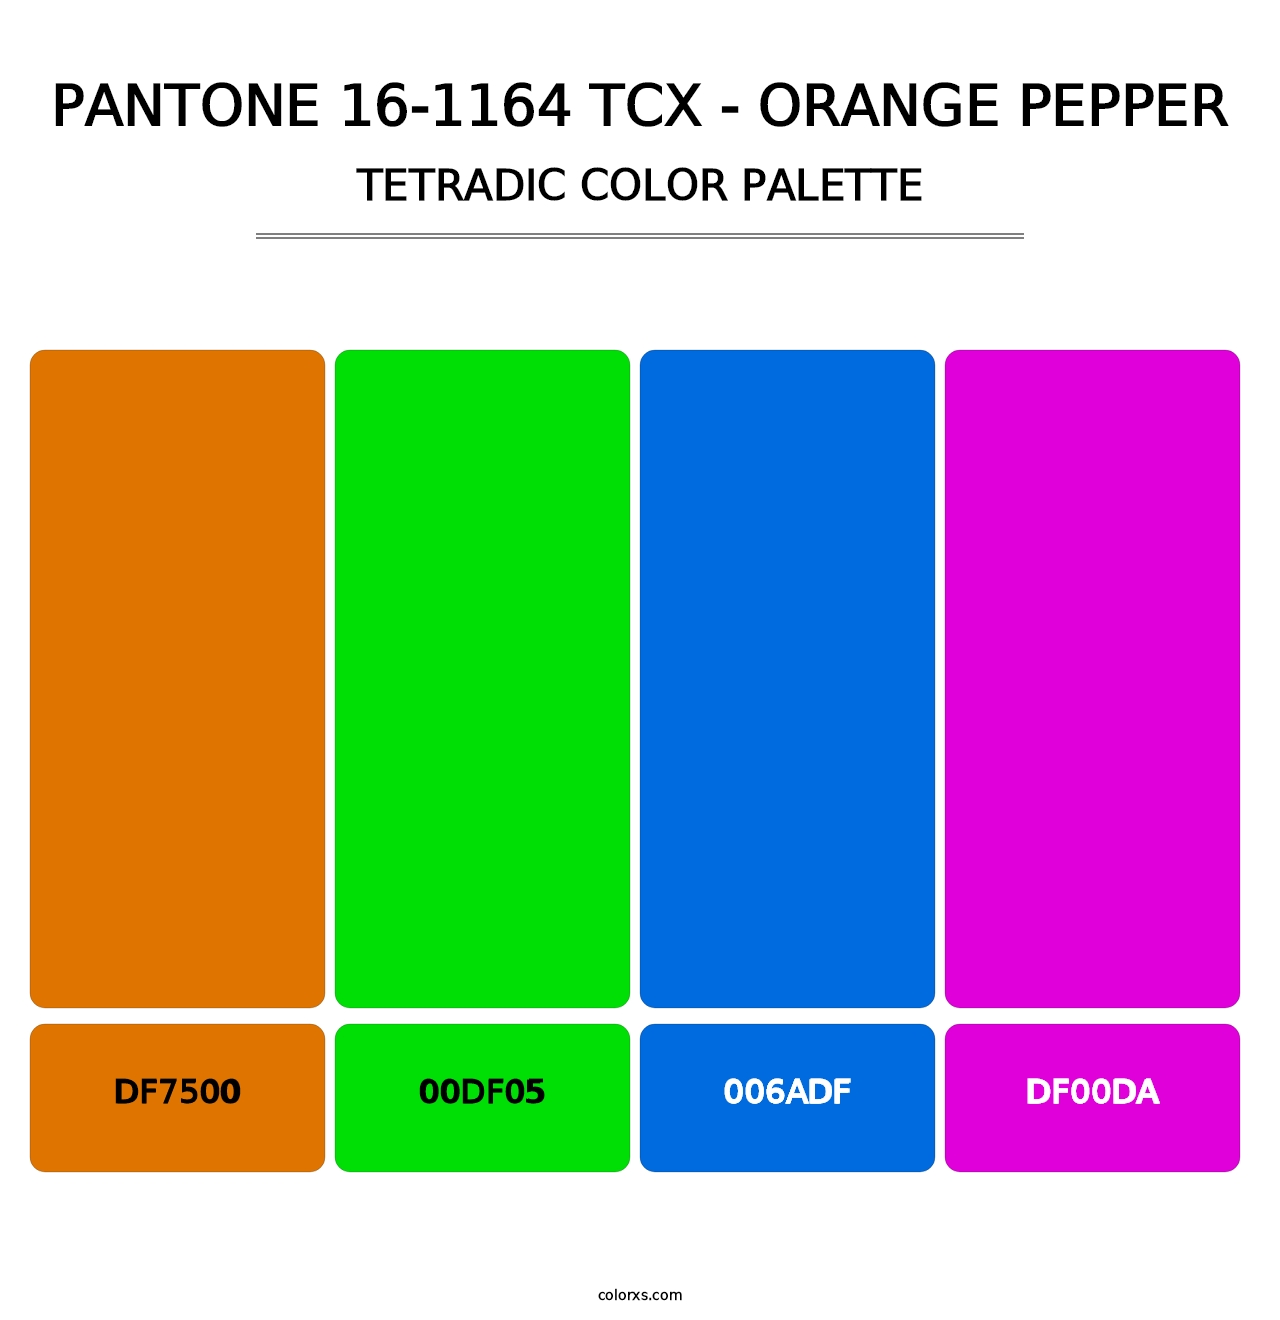 PANTONE 16-1164 TCX - Orange Pepper - Tetradic Color Palette